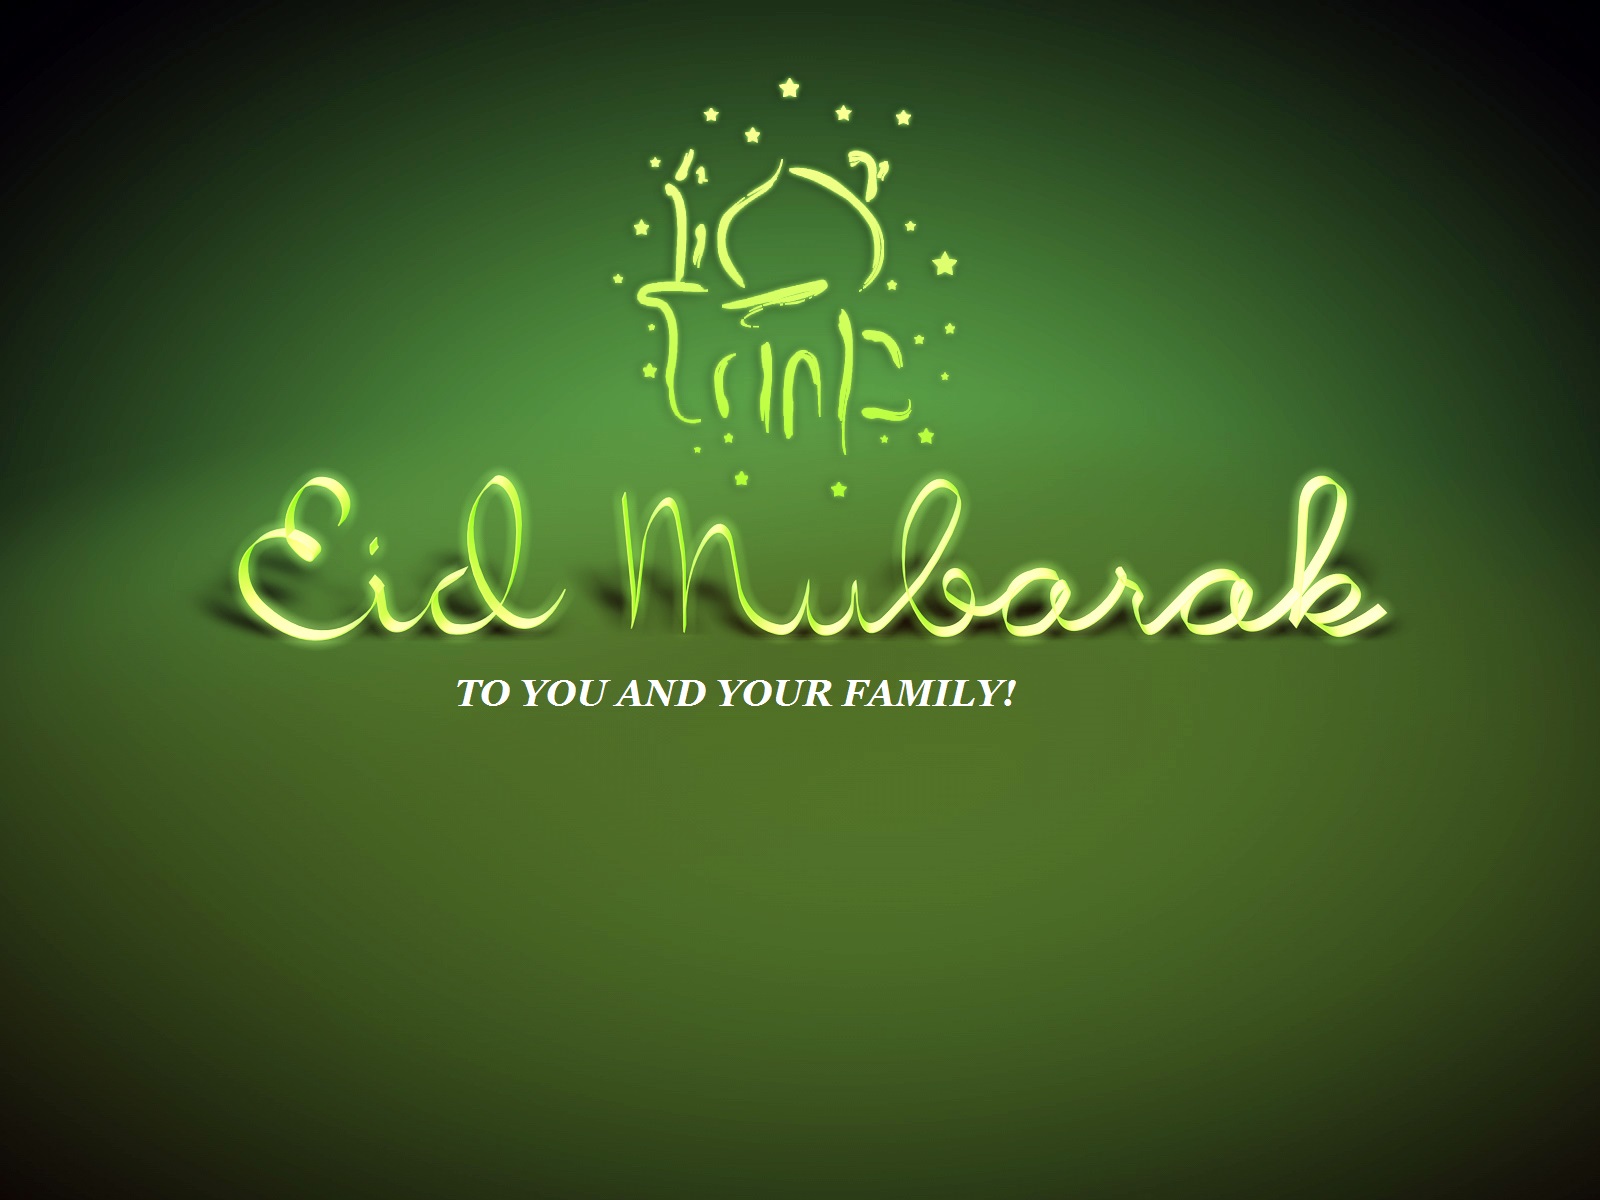 Eid Mubarak images